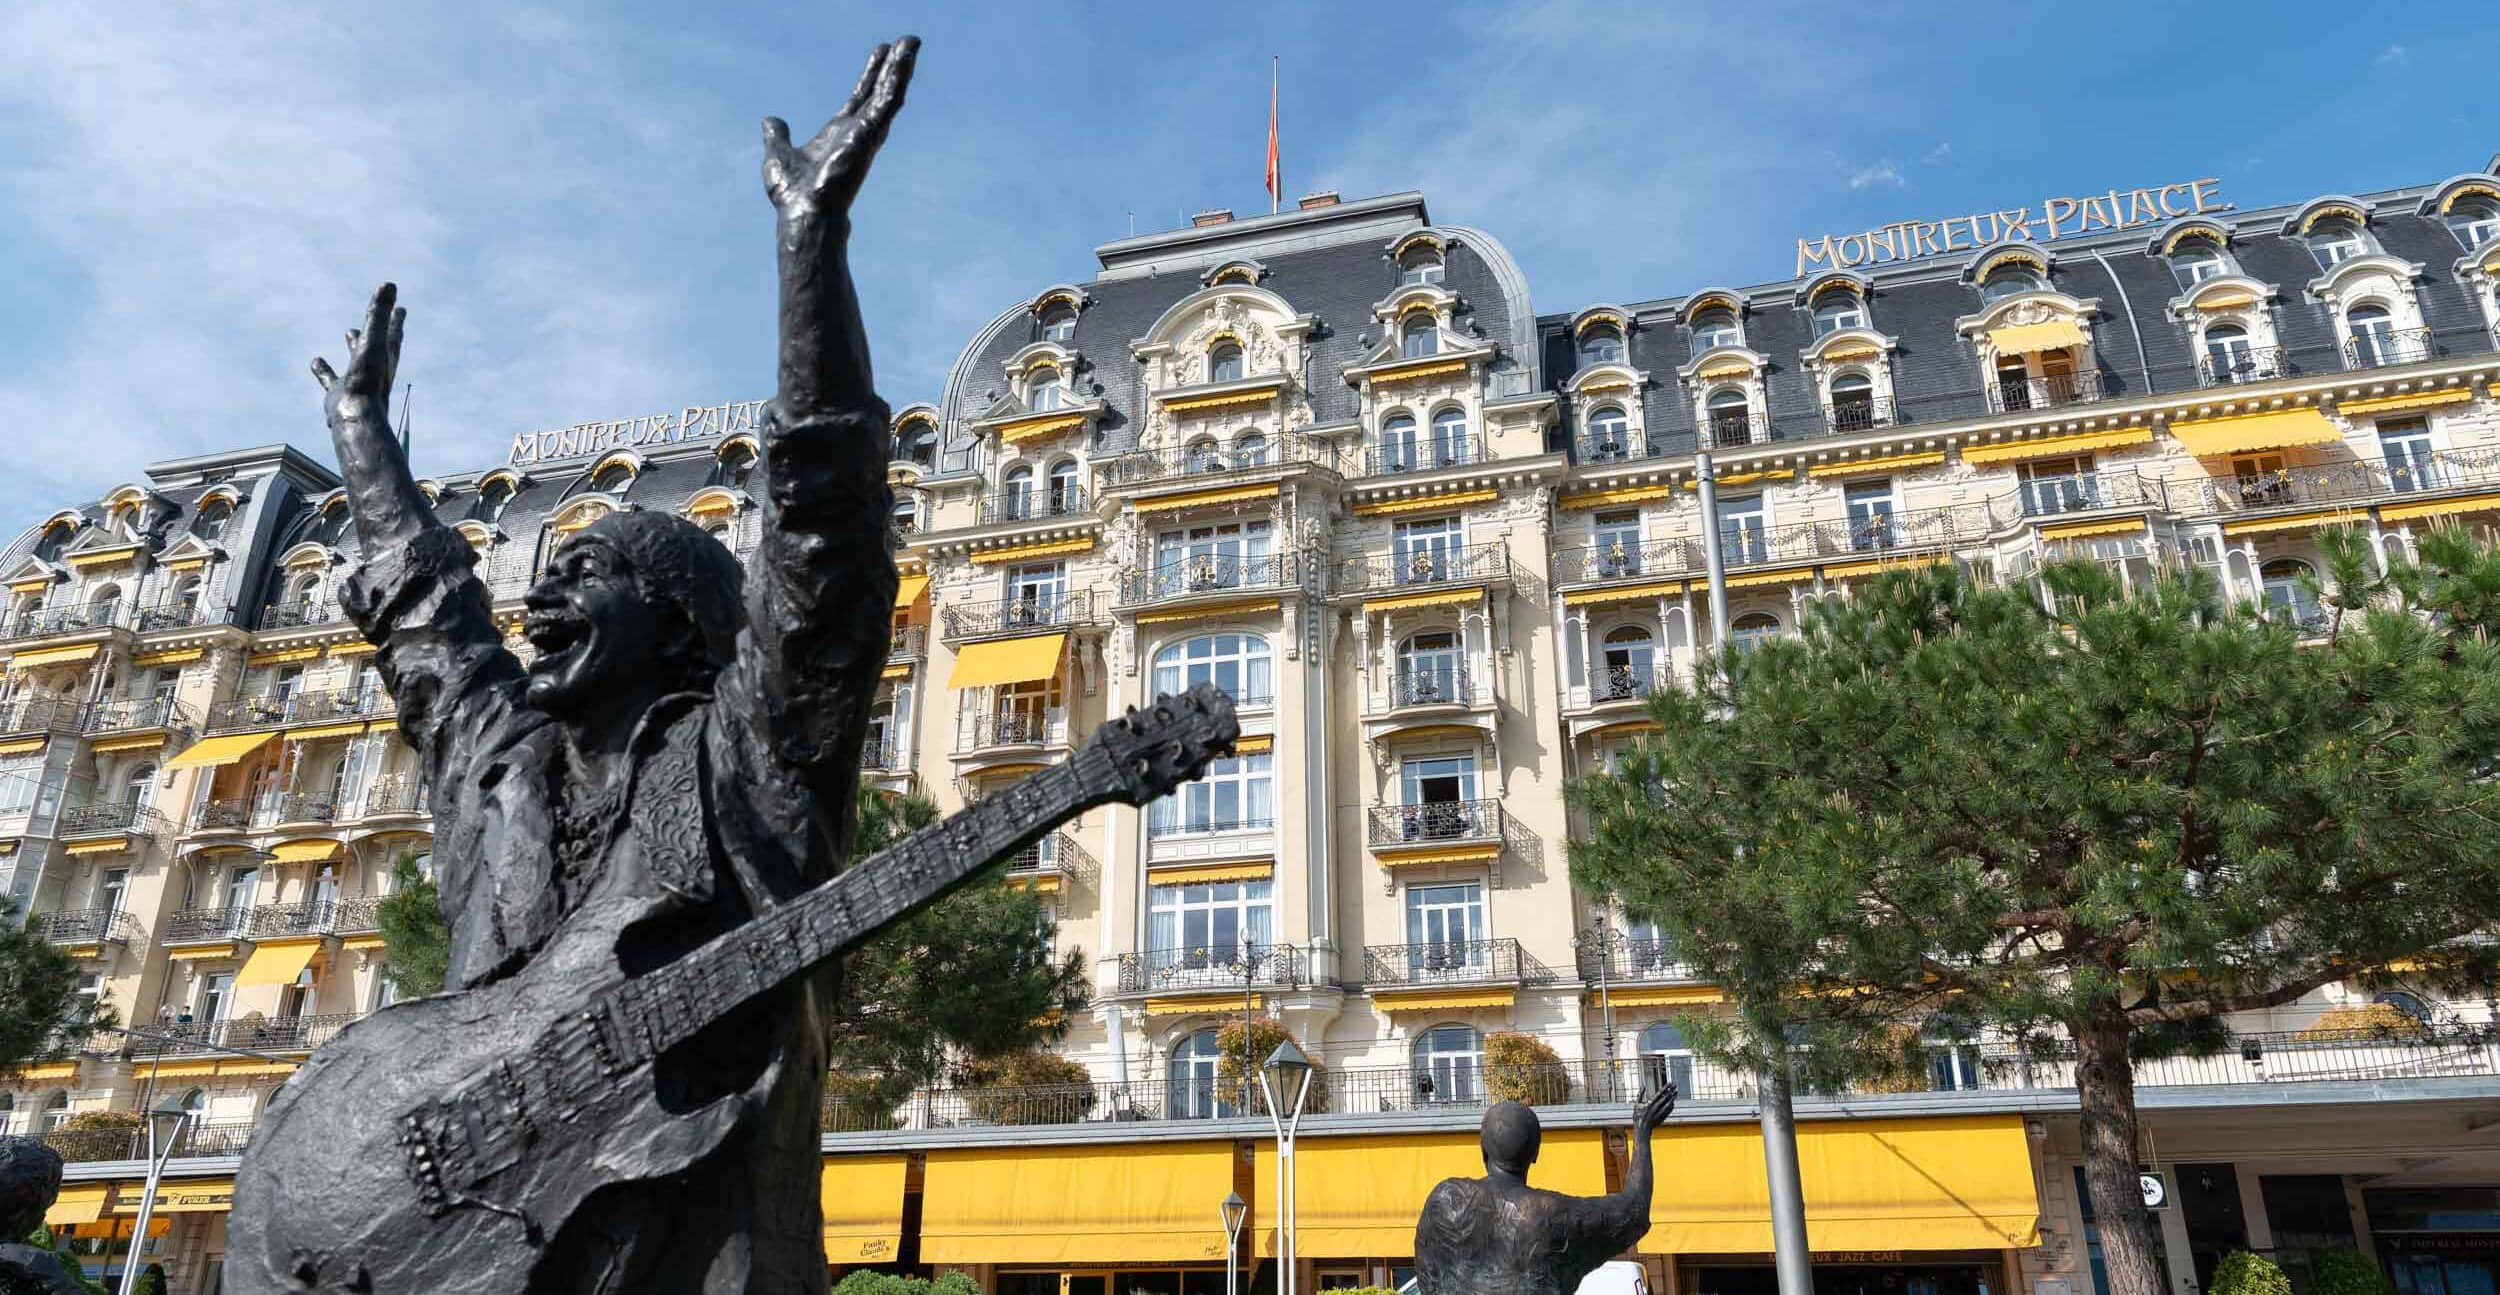 Carlos Santana statue in Montreux